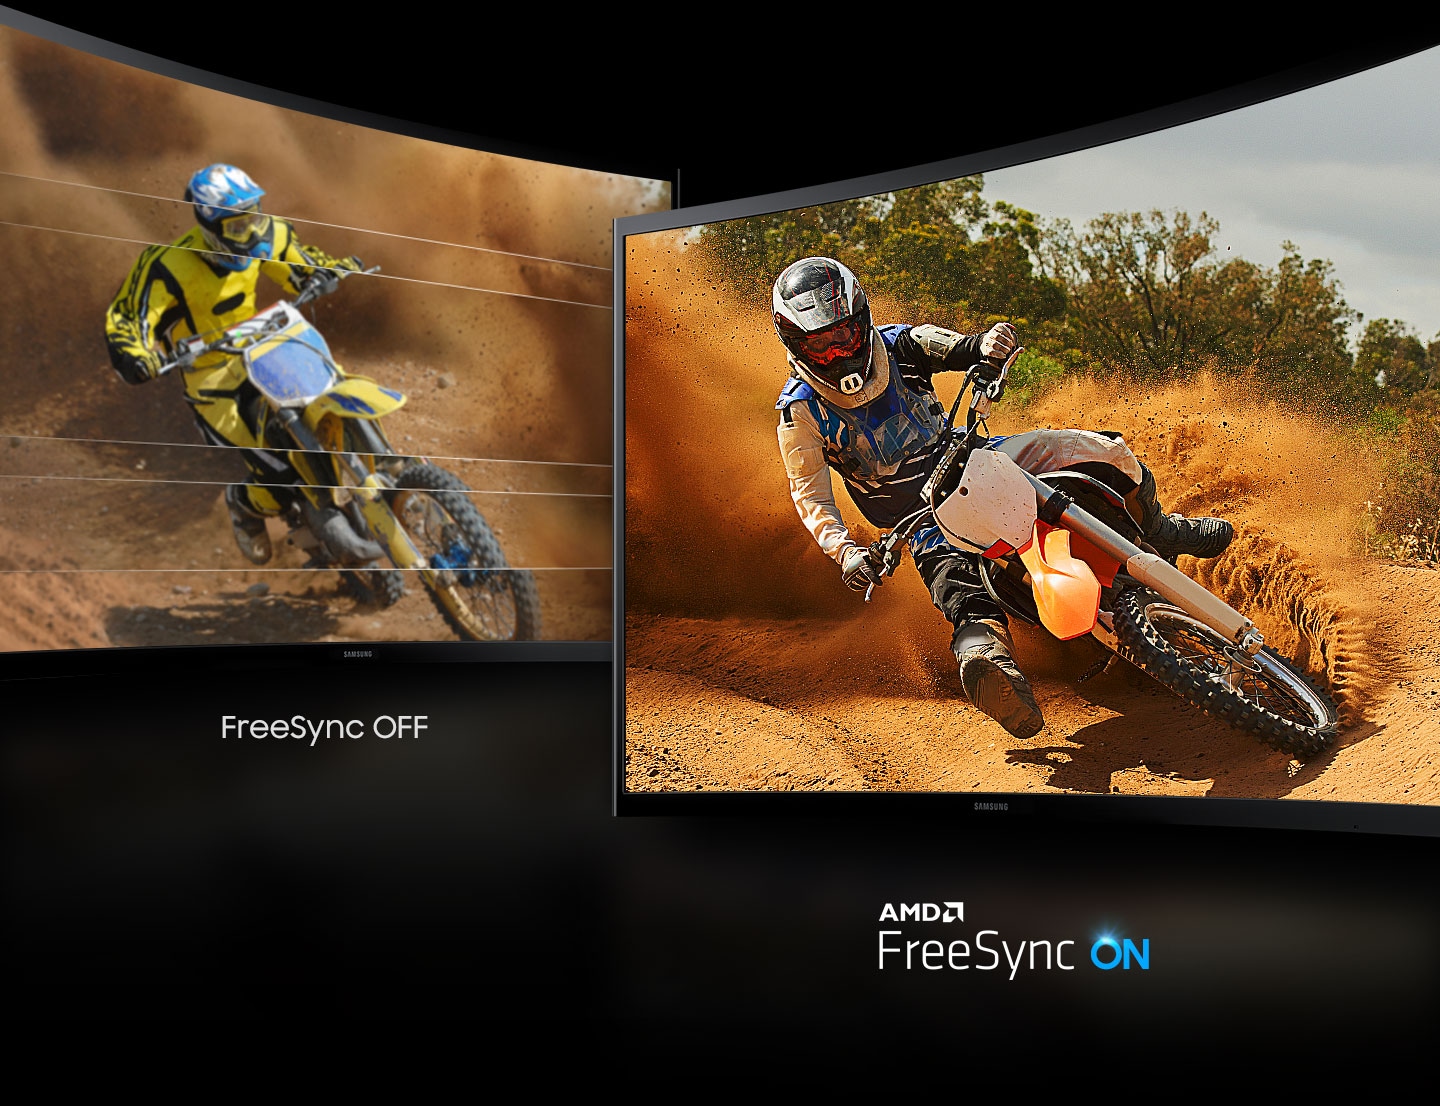 Сравнение между FreeSync OFF и AMD FreeSync On. FreeSync OFF вызывает разрывы изображения всадника на мониторе, но изображение всадника на мониторе AMD FreeSync четко видно без помех.